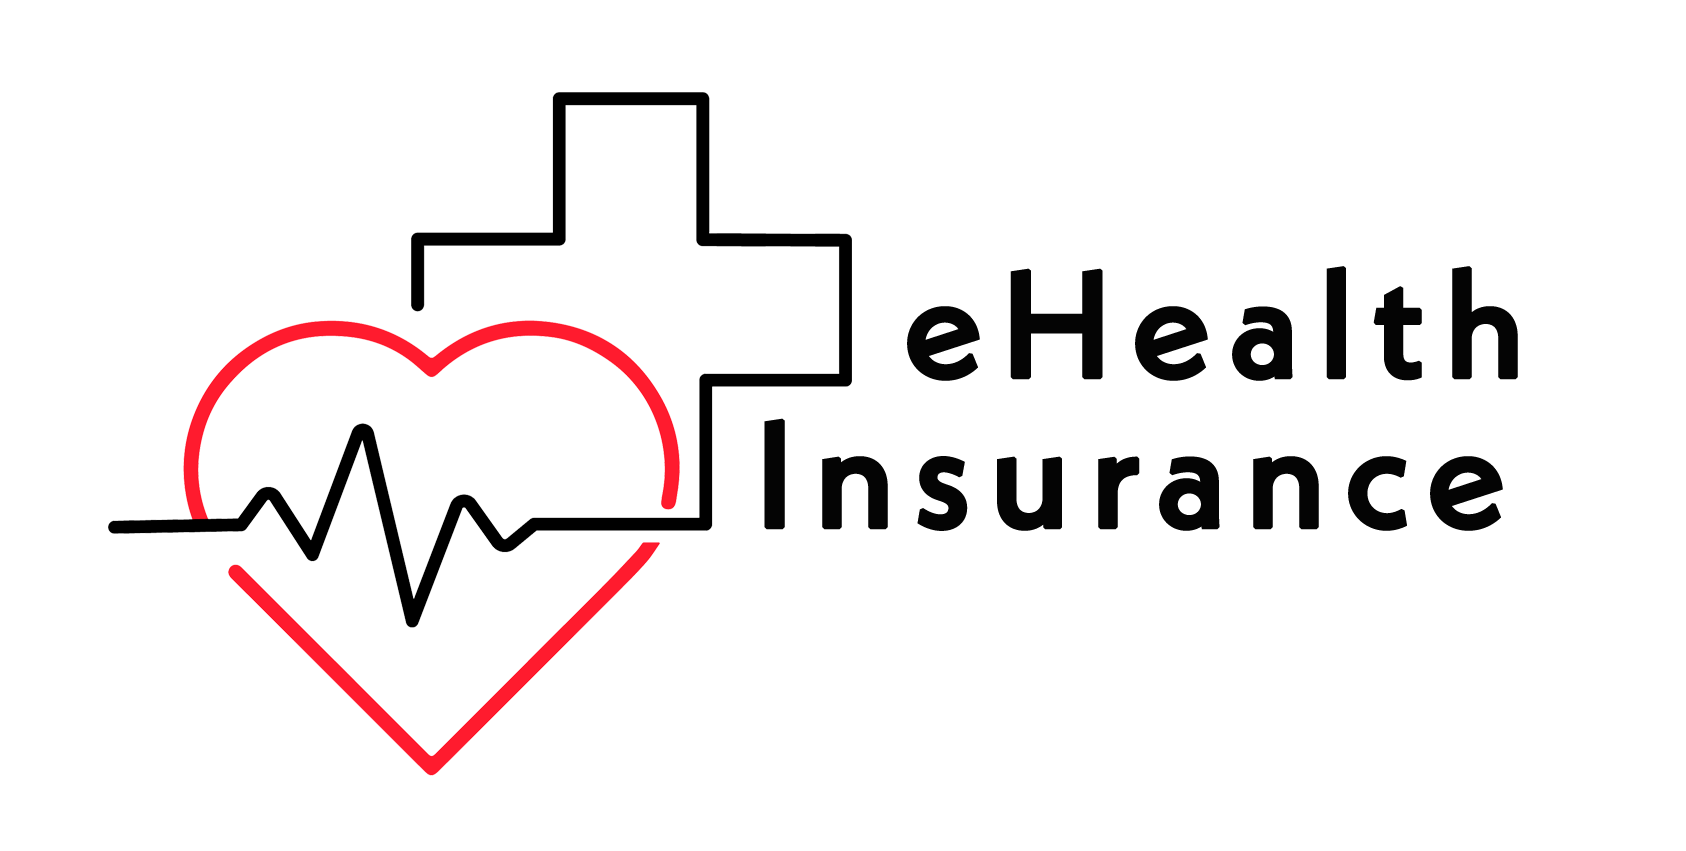 eHealth Insurance